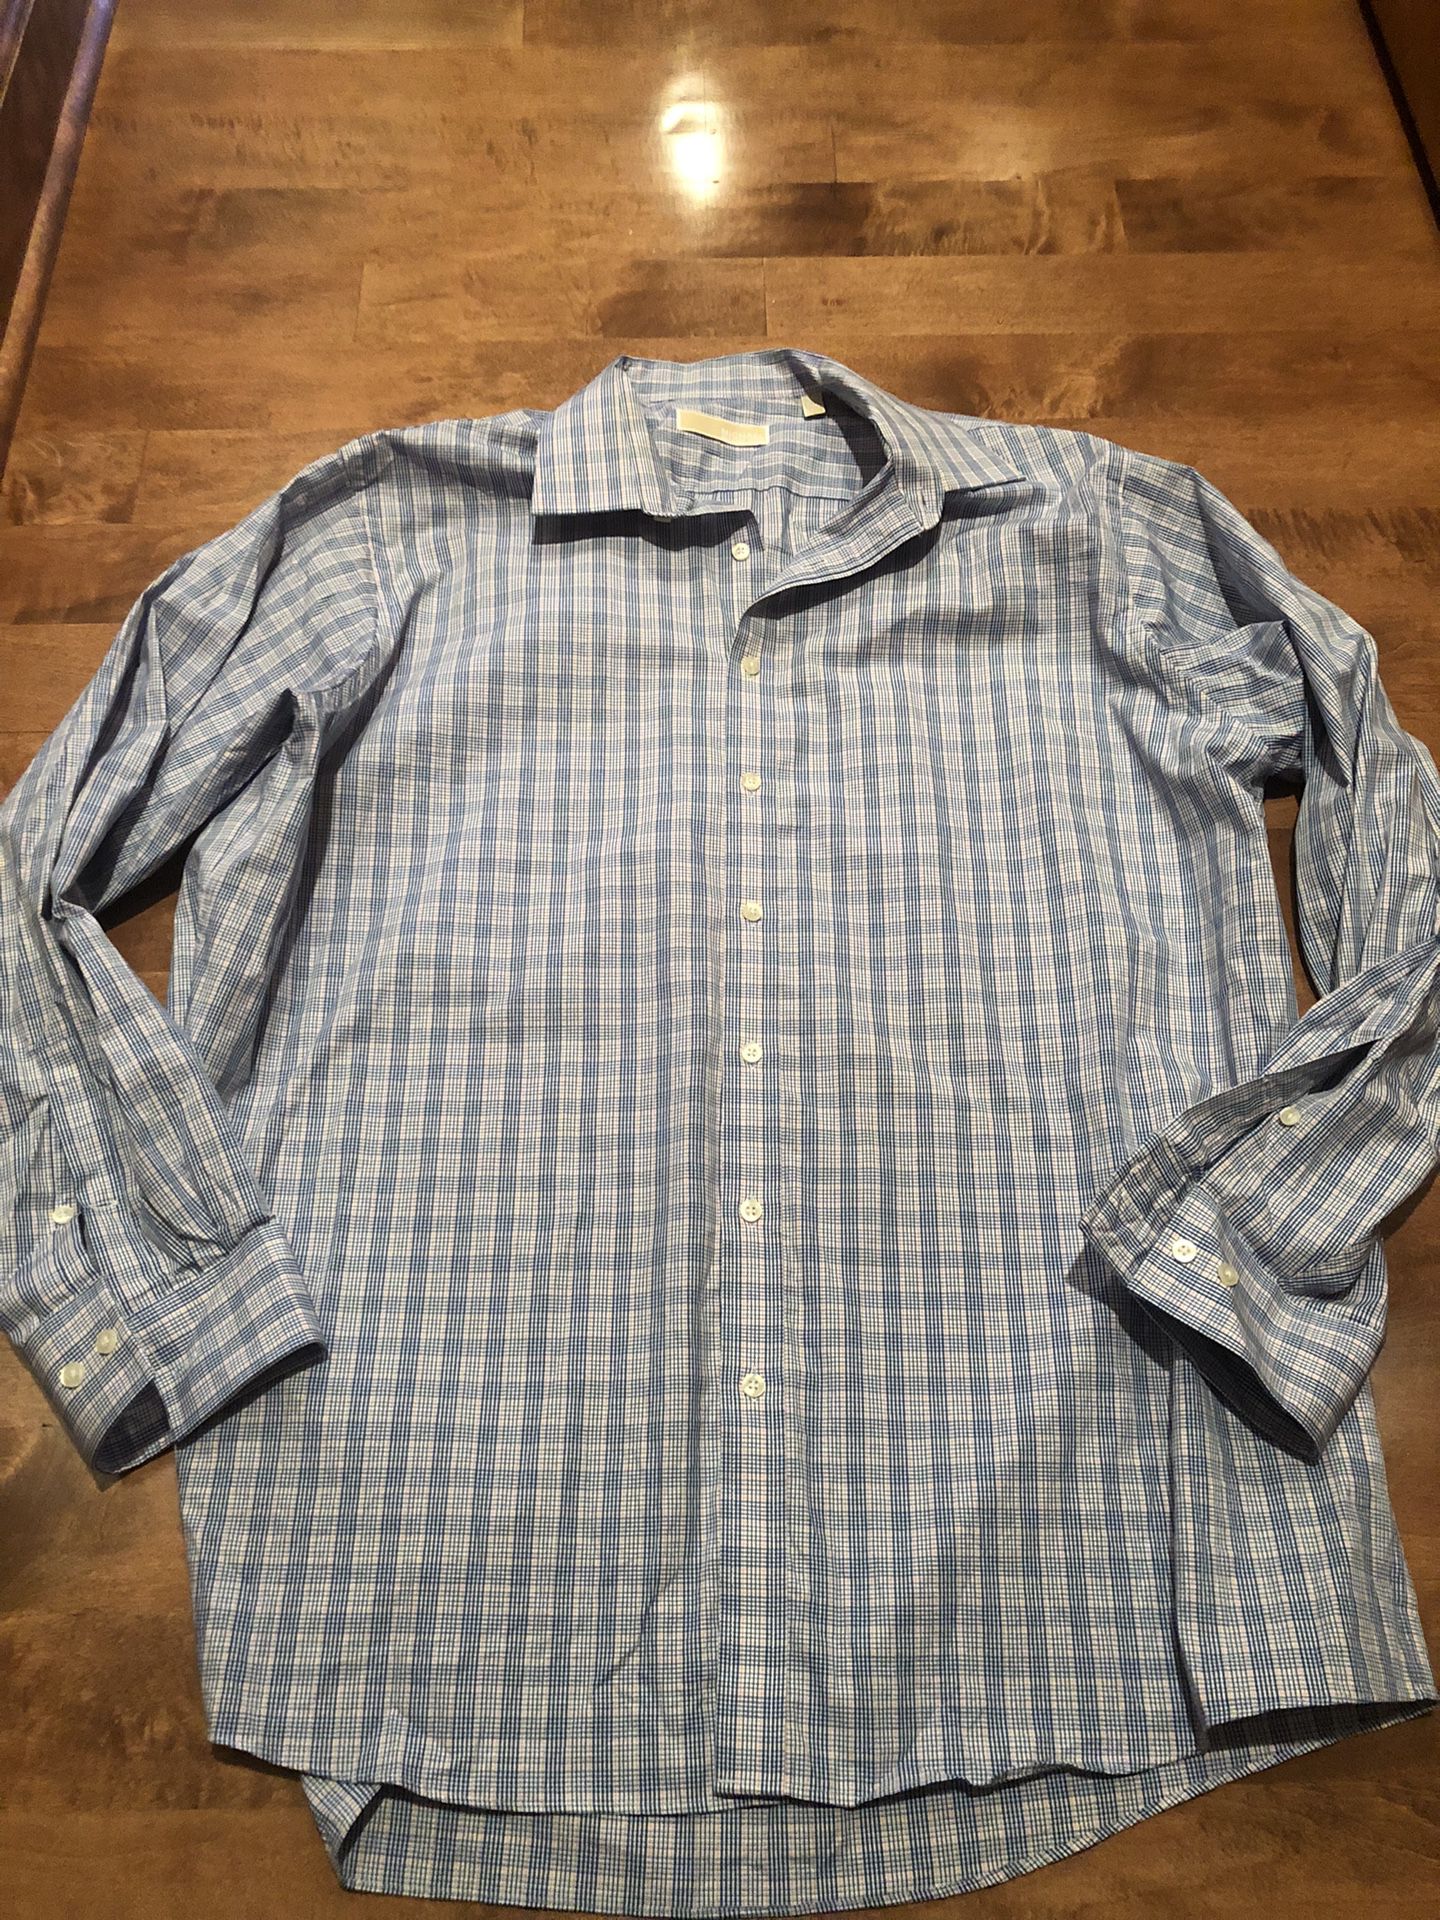 Michael Kors, men’s dress shirt shipping available